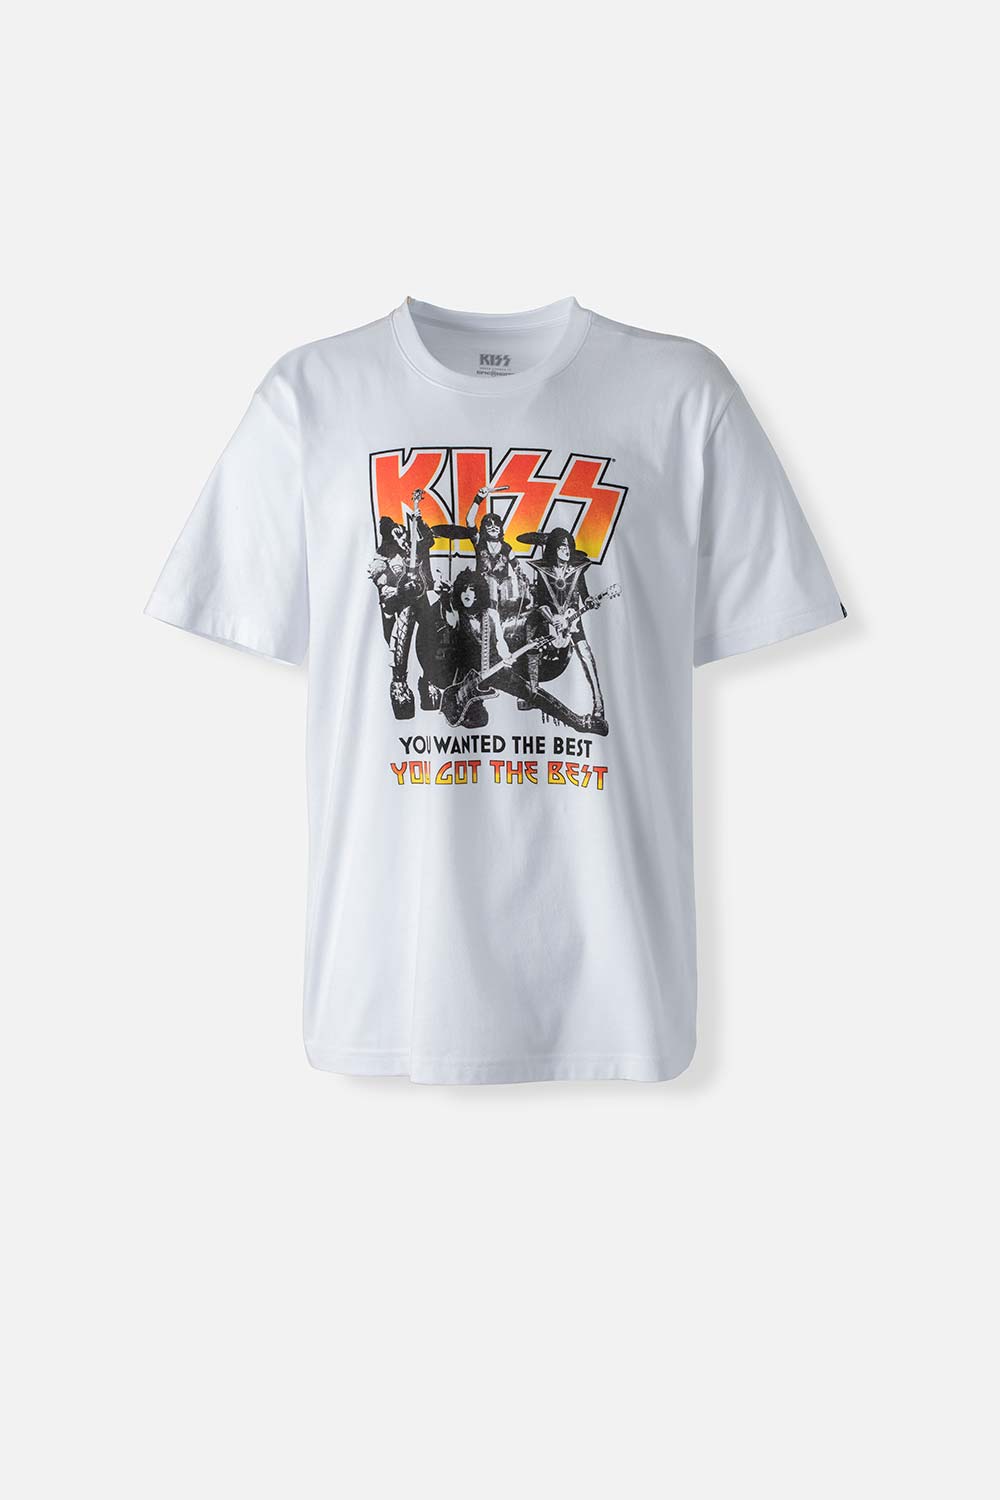 Camisetas de Kiss blanca manga corta género neutro XS-0